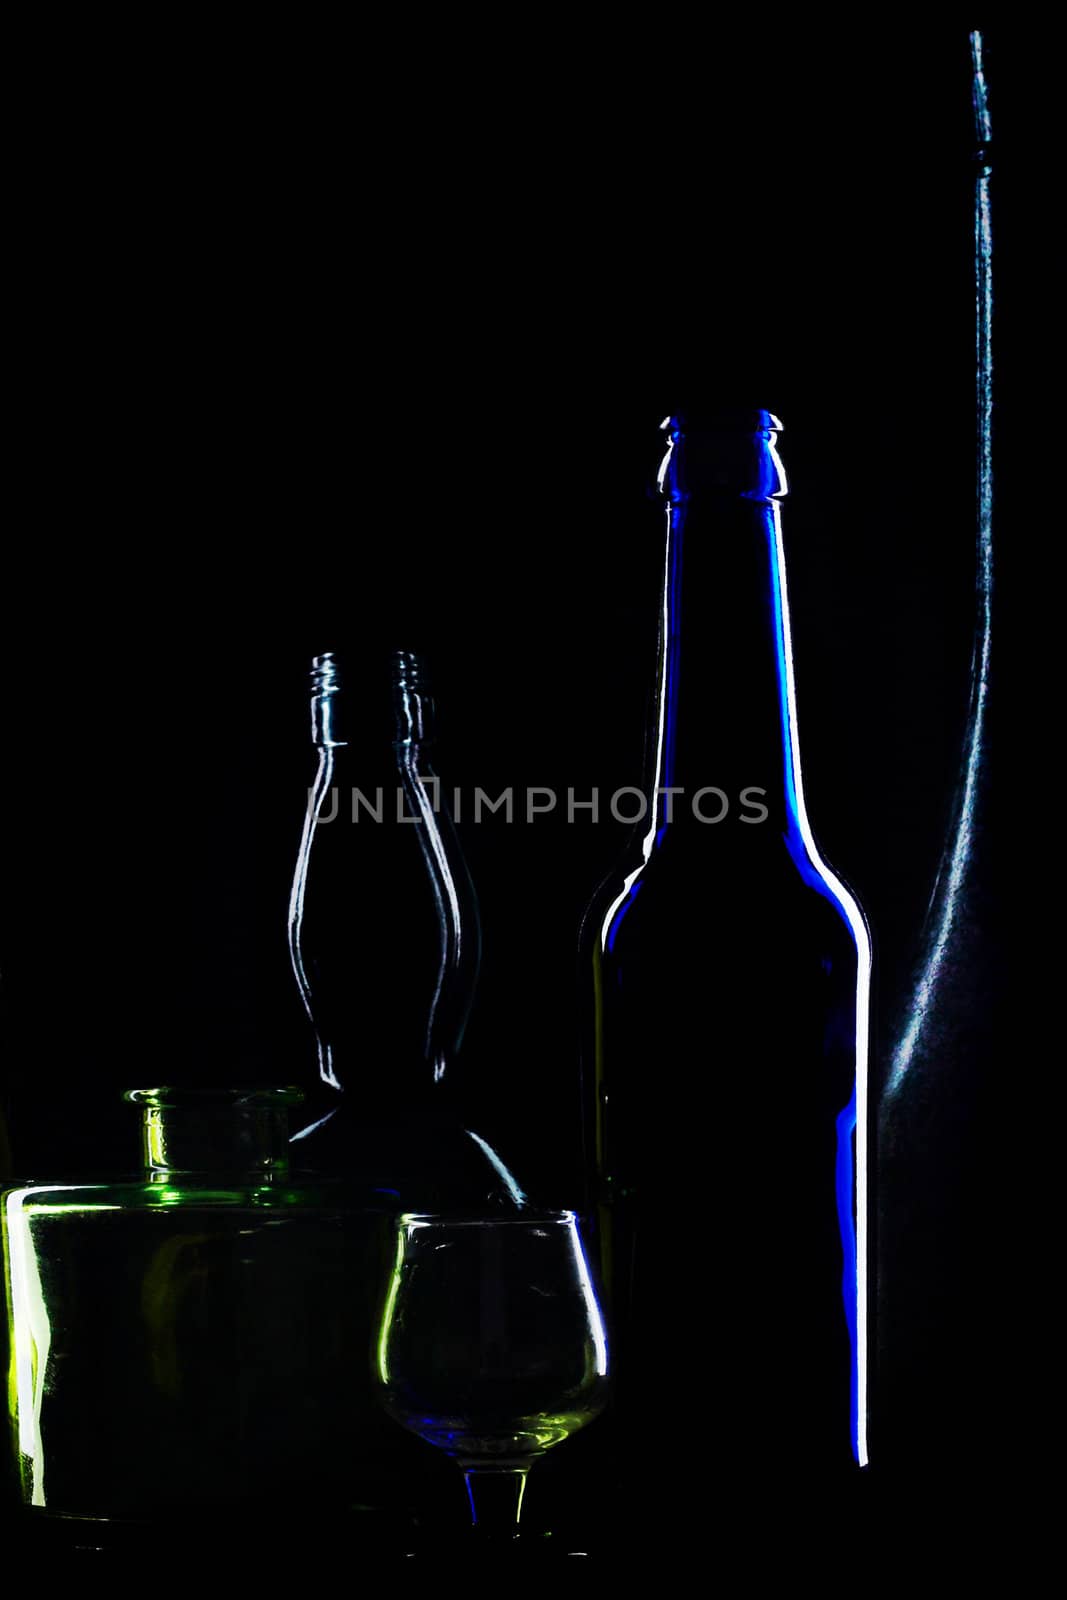 An image of glasses bottles on black background